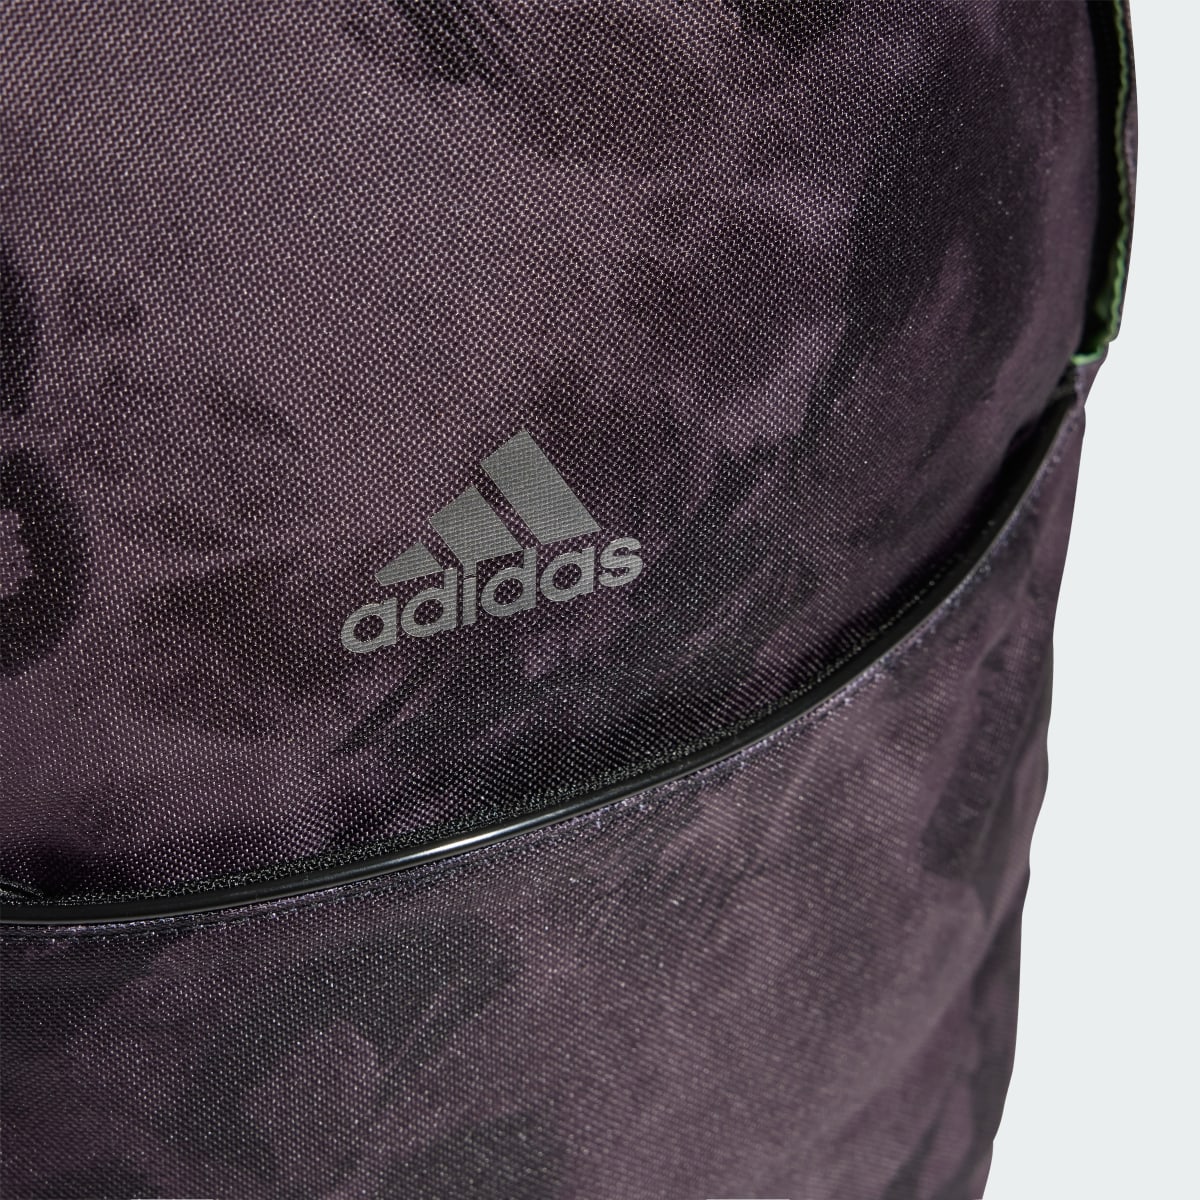 Adidas Gym Backpack. 6